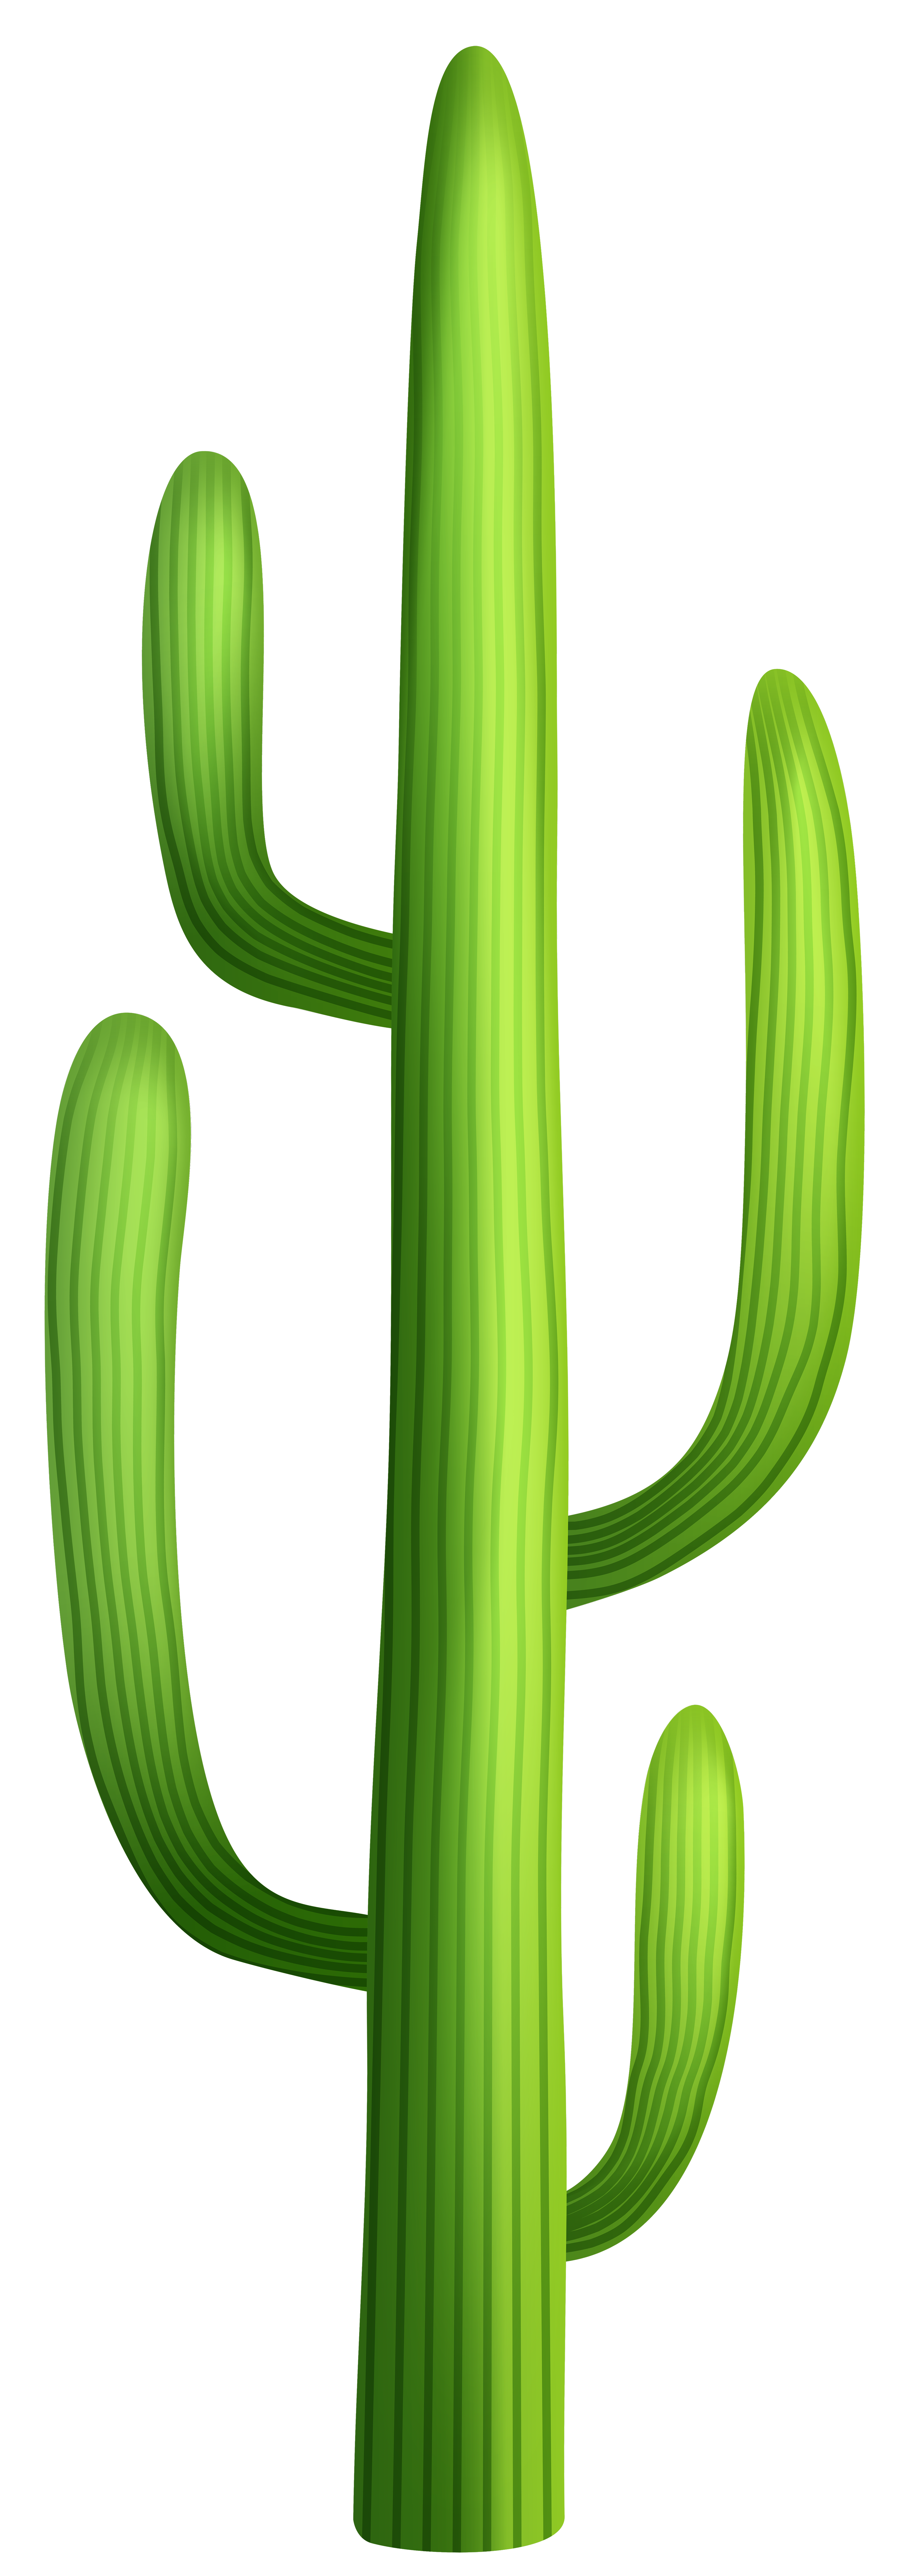 Cactus Illustration Free PNG